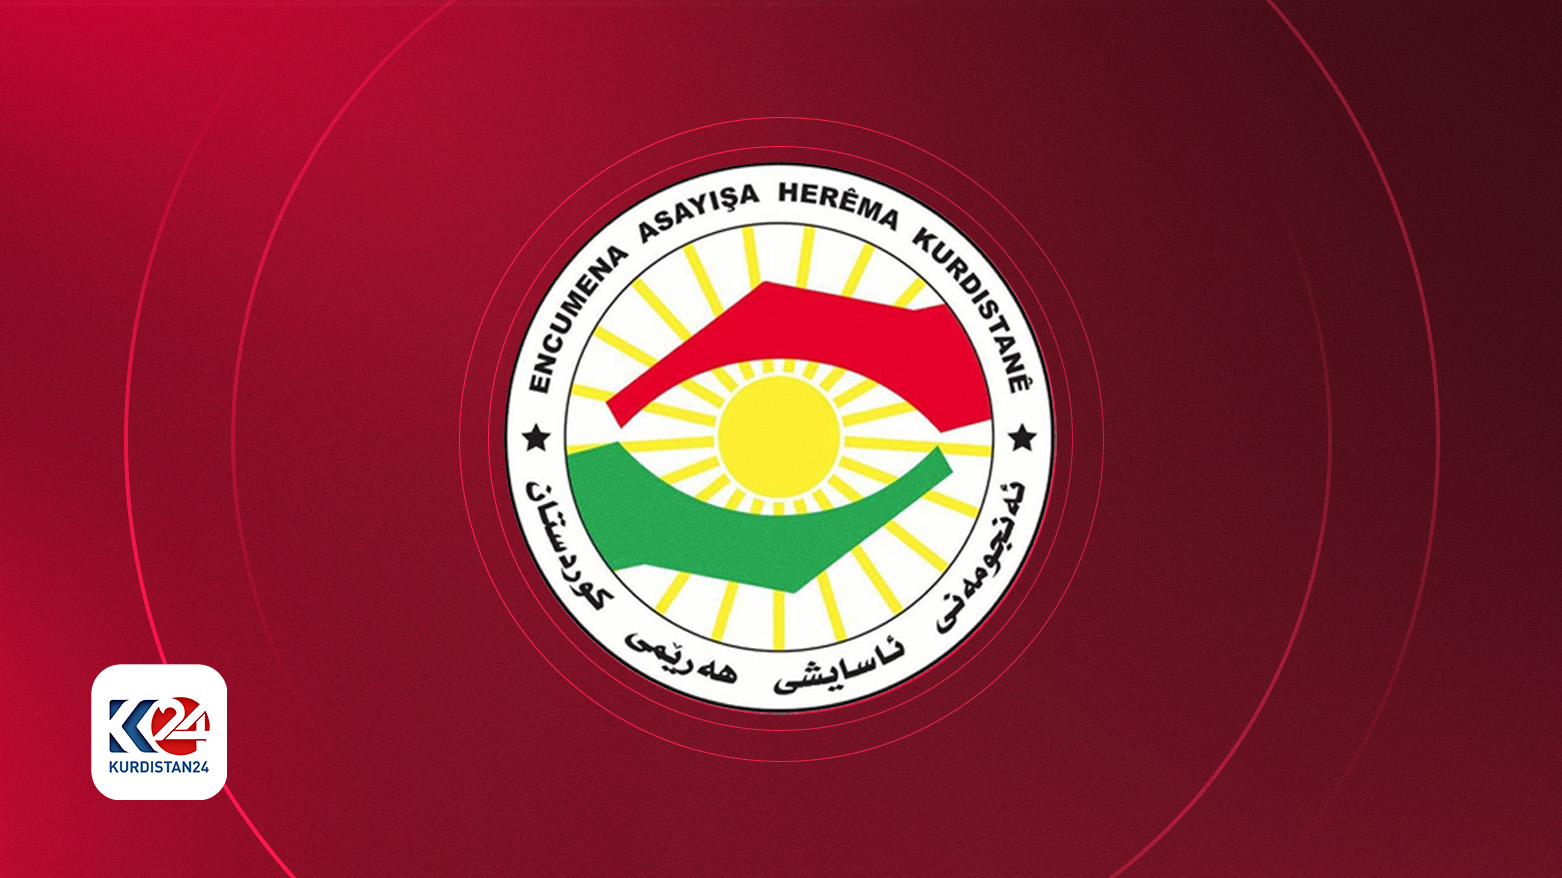 PM Barzani Saudi investment official address mutual ties